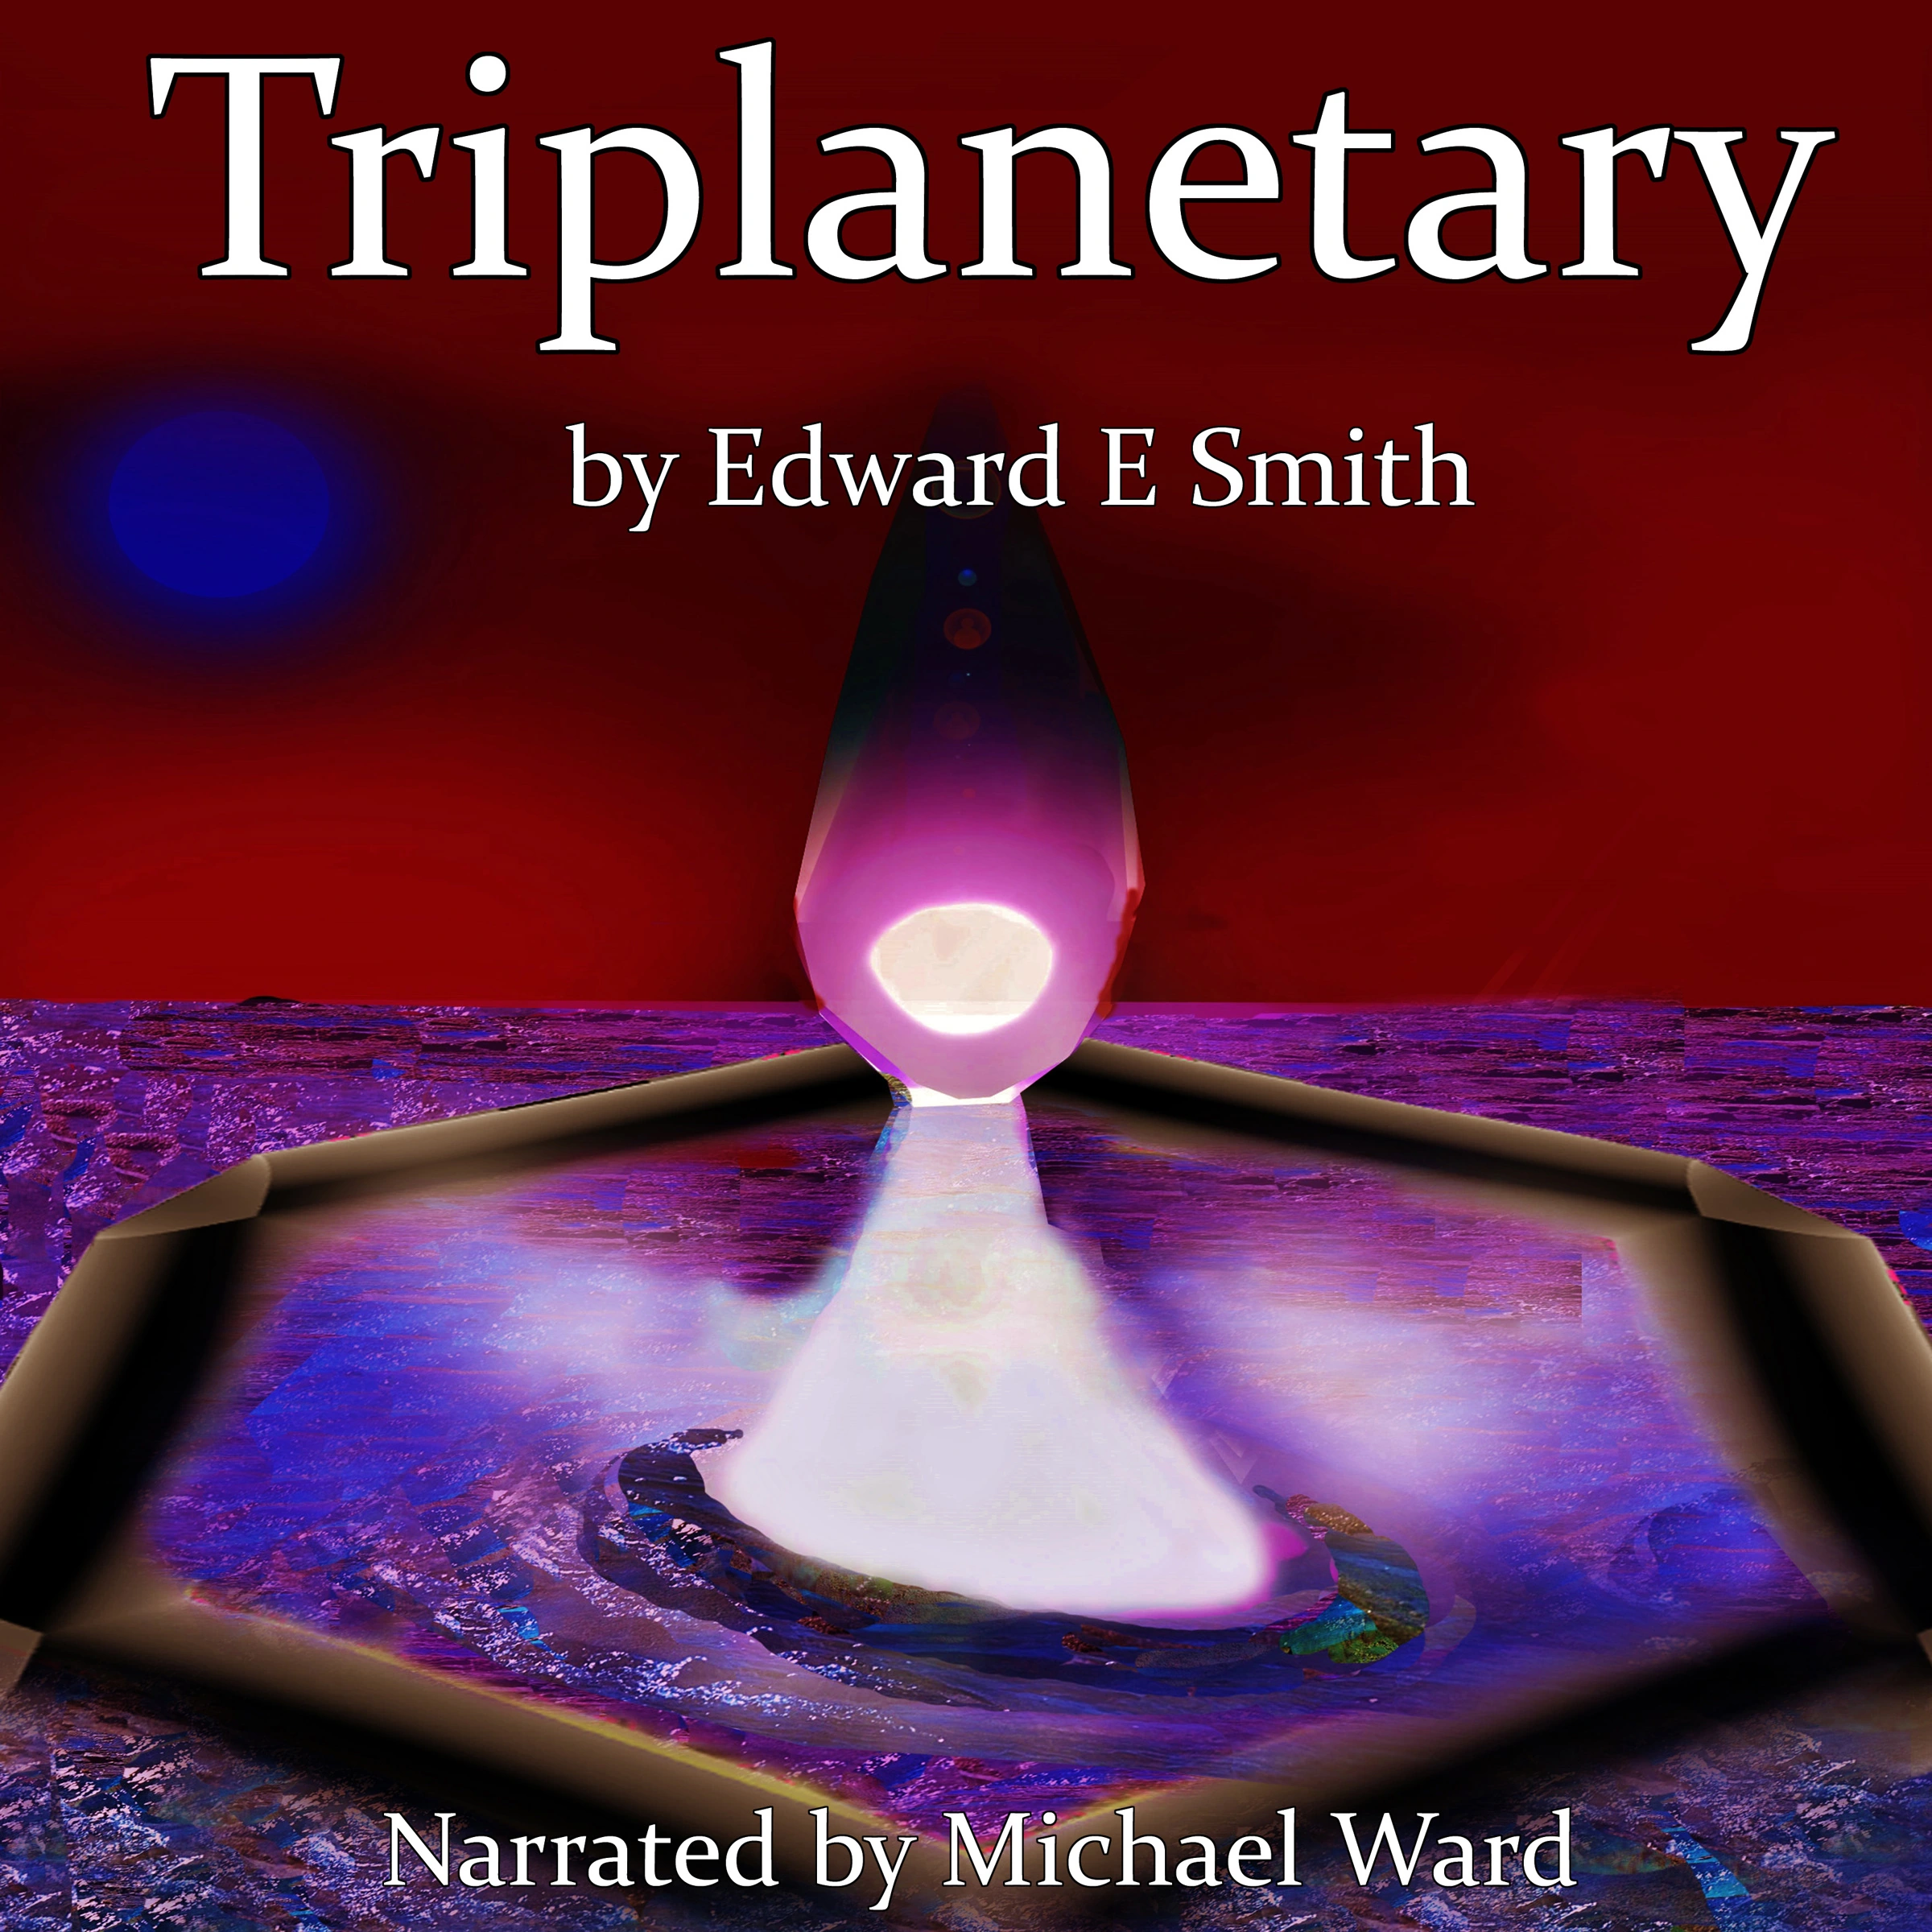 Triplanetary by Edward E Smith Audiobook